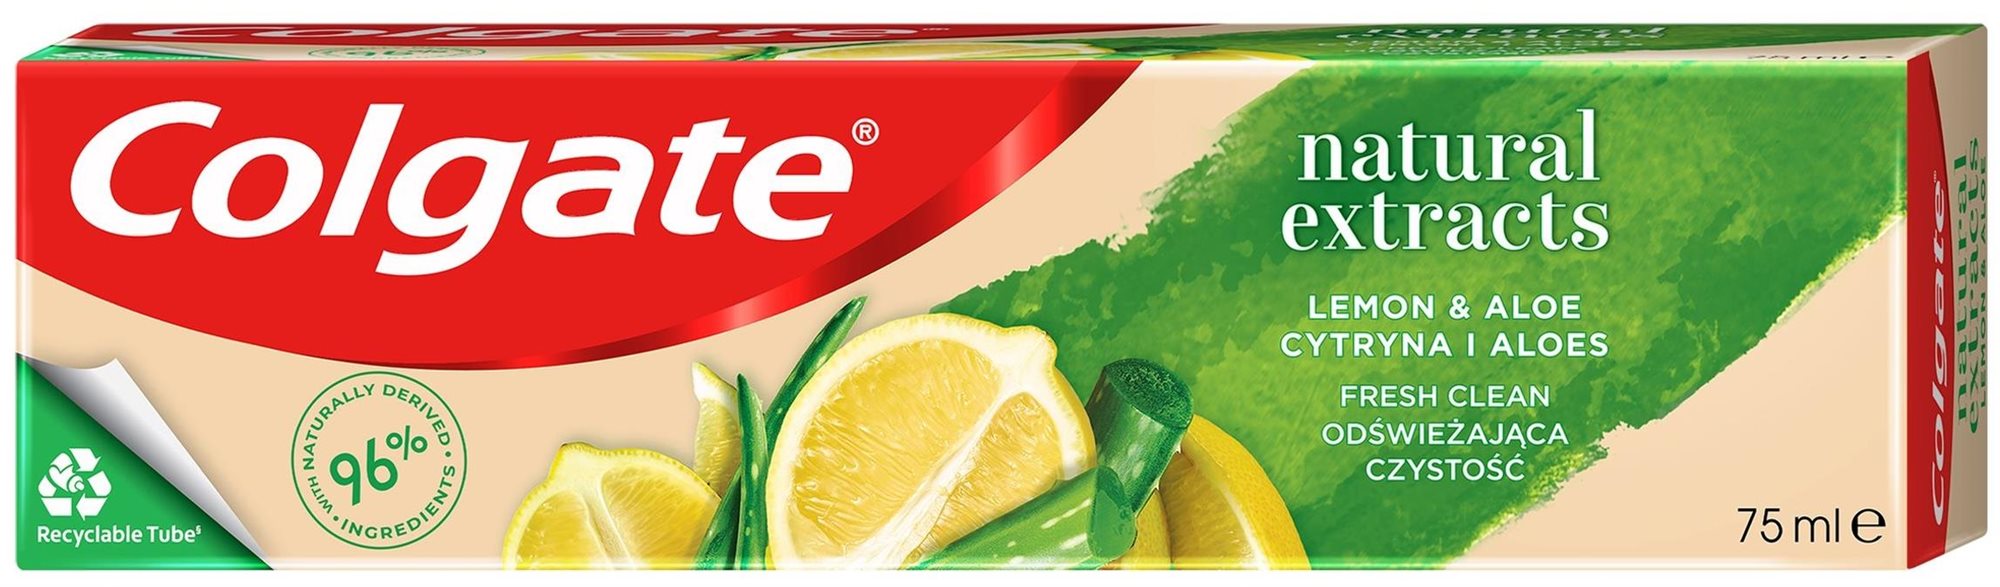 COLGATE Naturals Lemon & Aloe 75 ml